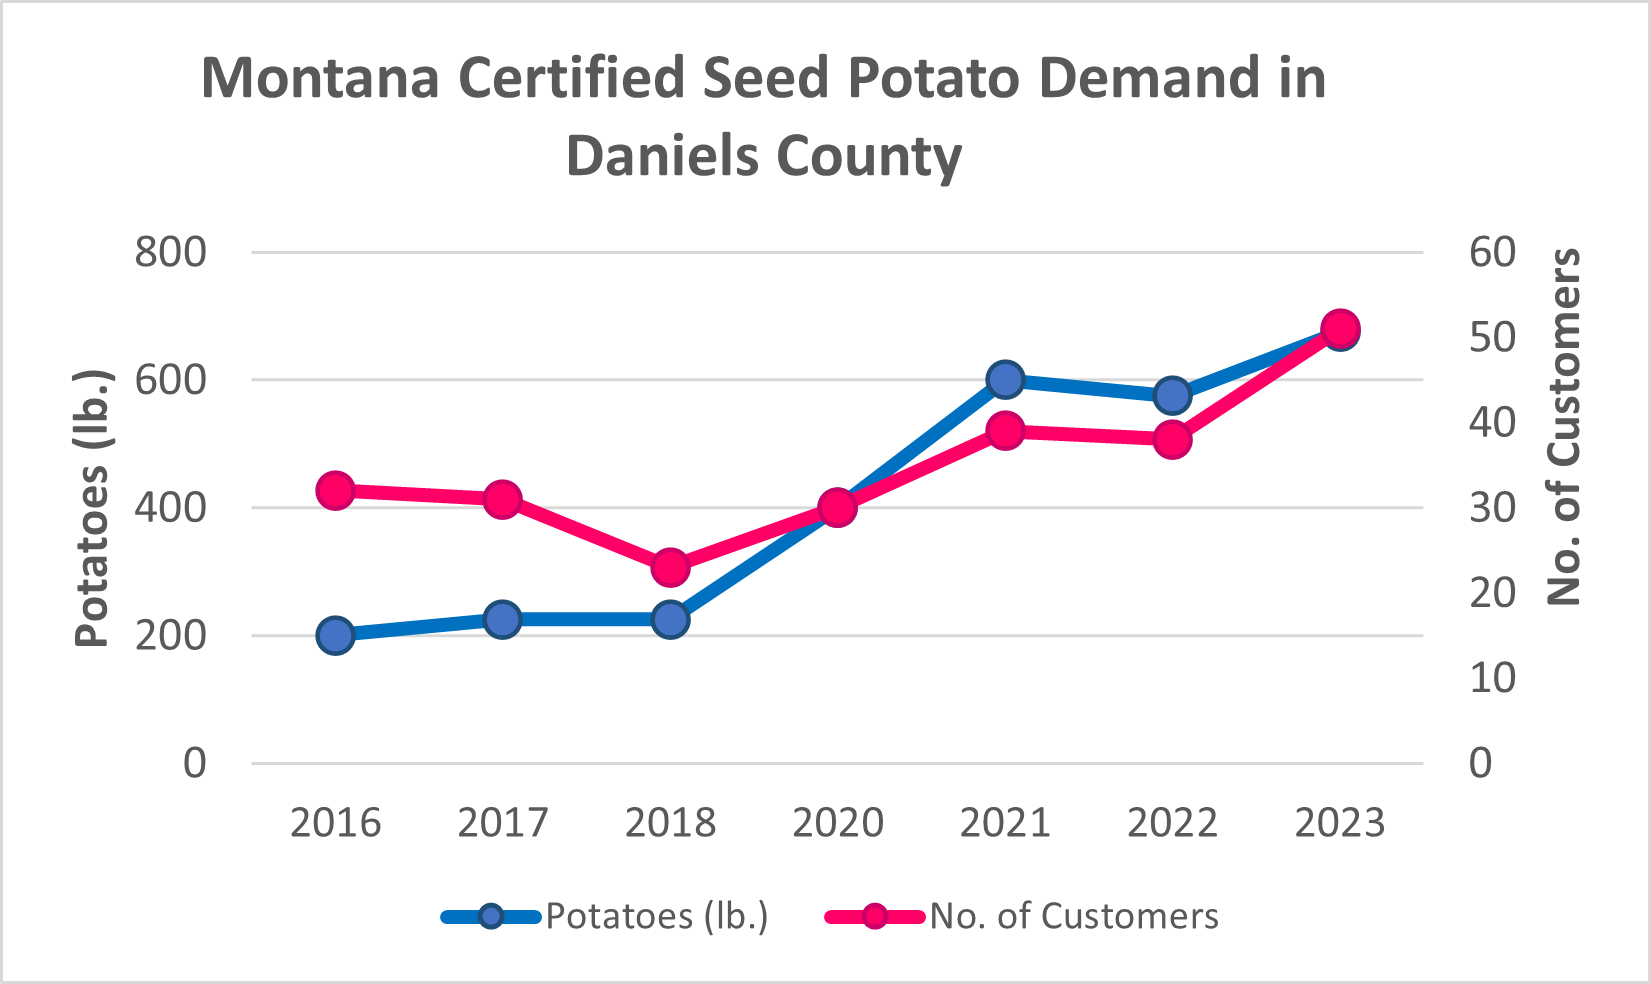 Montana Certified Seed Potato Demand in Daniels County